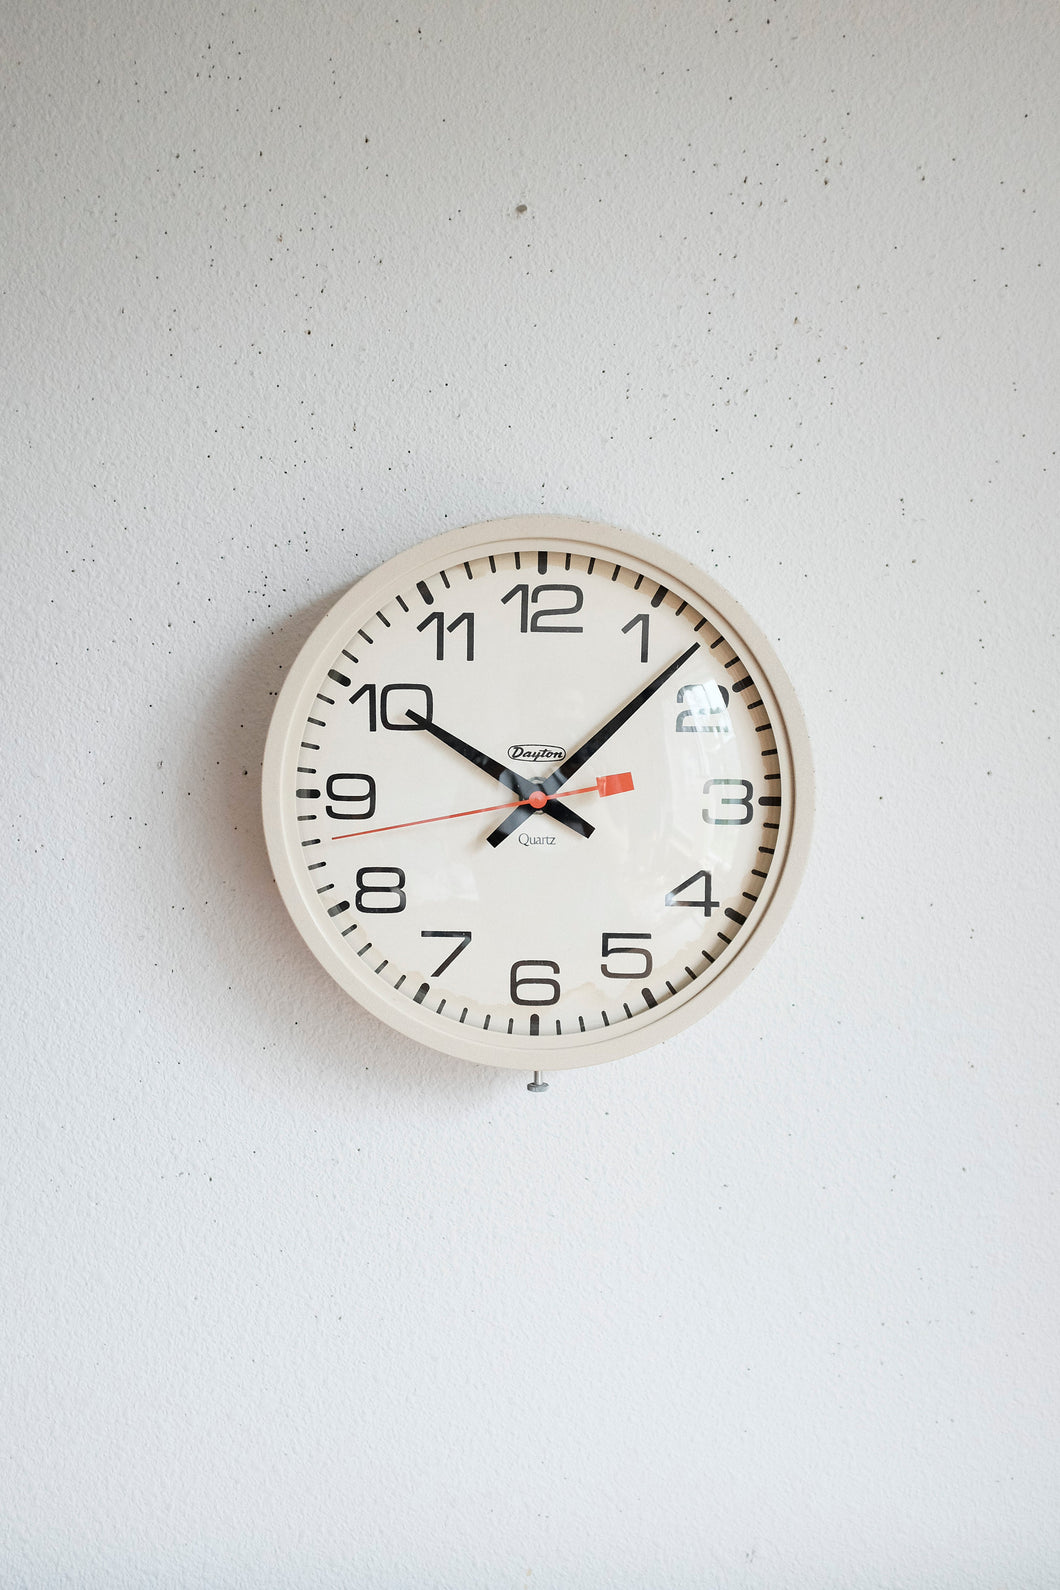 Vintage Wall clock - Dayton Wall clock